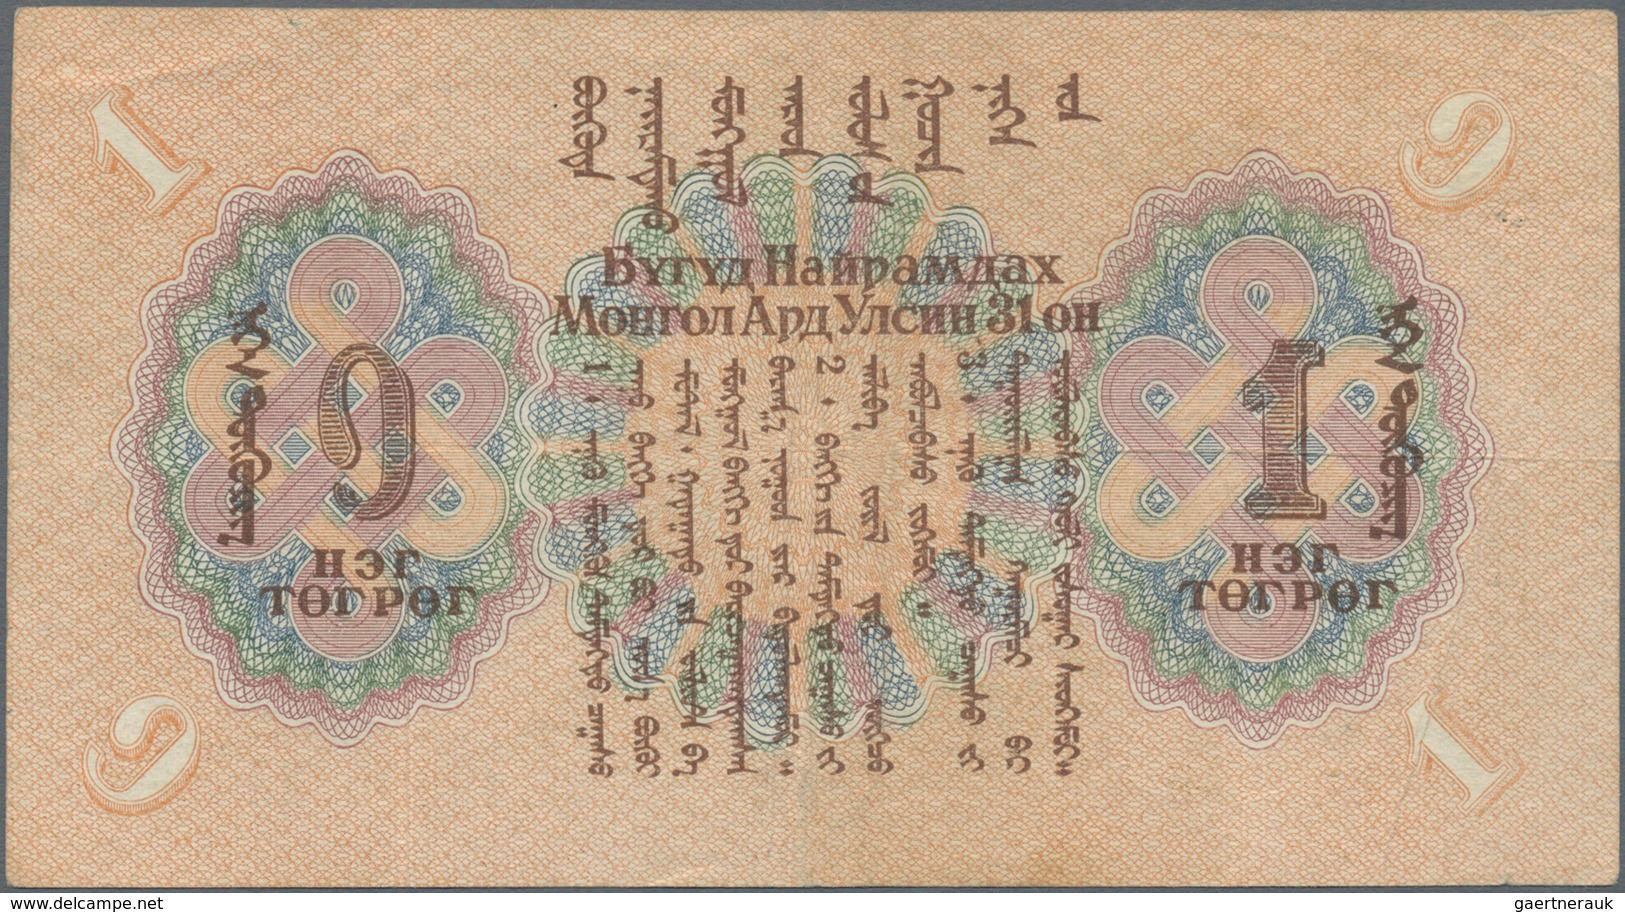 Mongolia / Mongolei: 1 Tugrik 1941, P.21, Very Nice Note With Crisp Paper, Some Minor Spots, Graffit - Mongolie